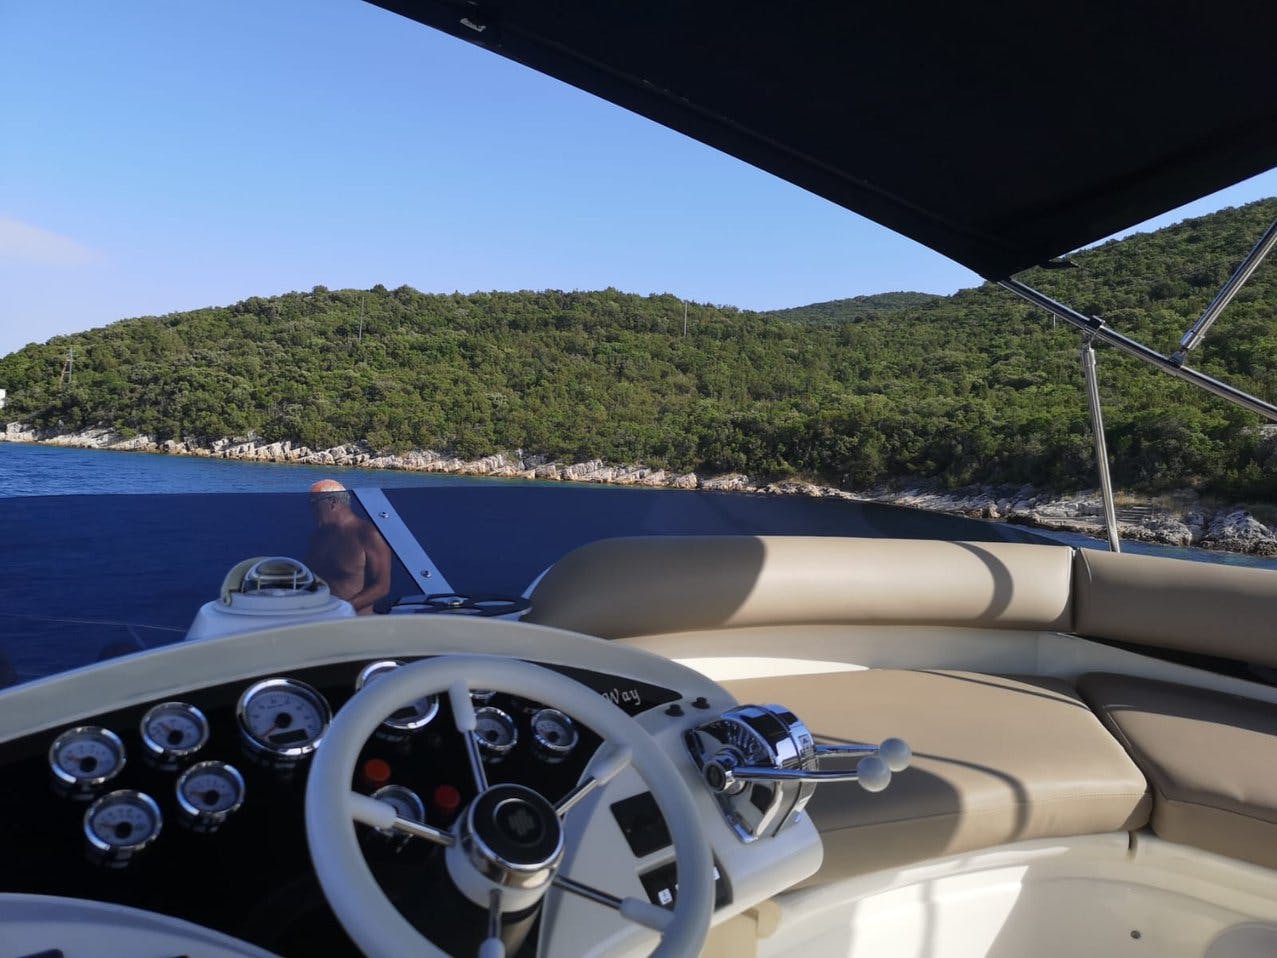 Book Fairline Phantom 40 Motor yacht for bareboat charter in Dubrovnik, Gruž, Dubrovnik region, Croatia with TripYacht!, picture 7